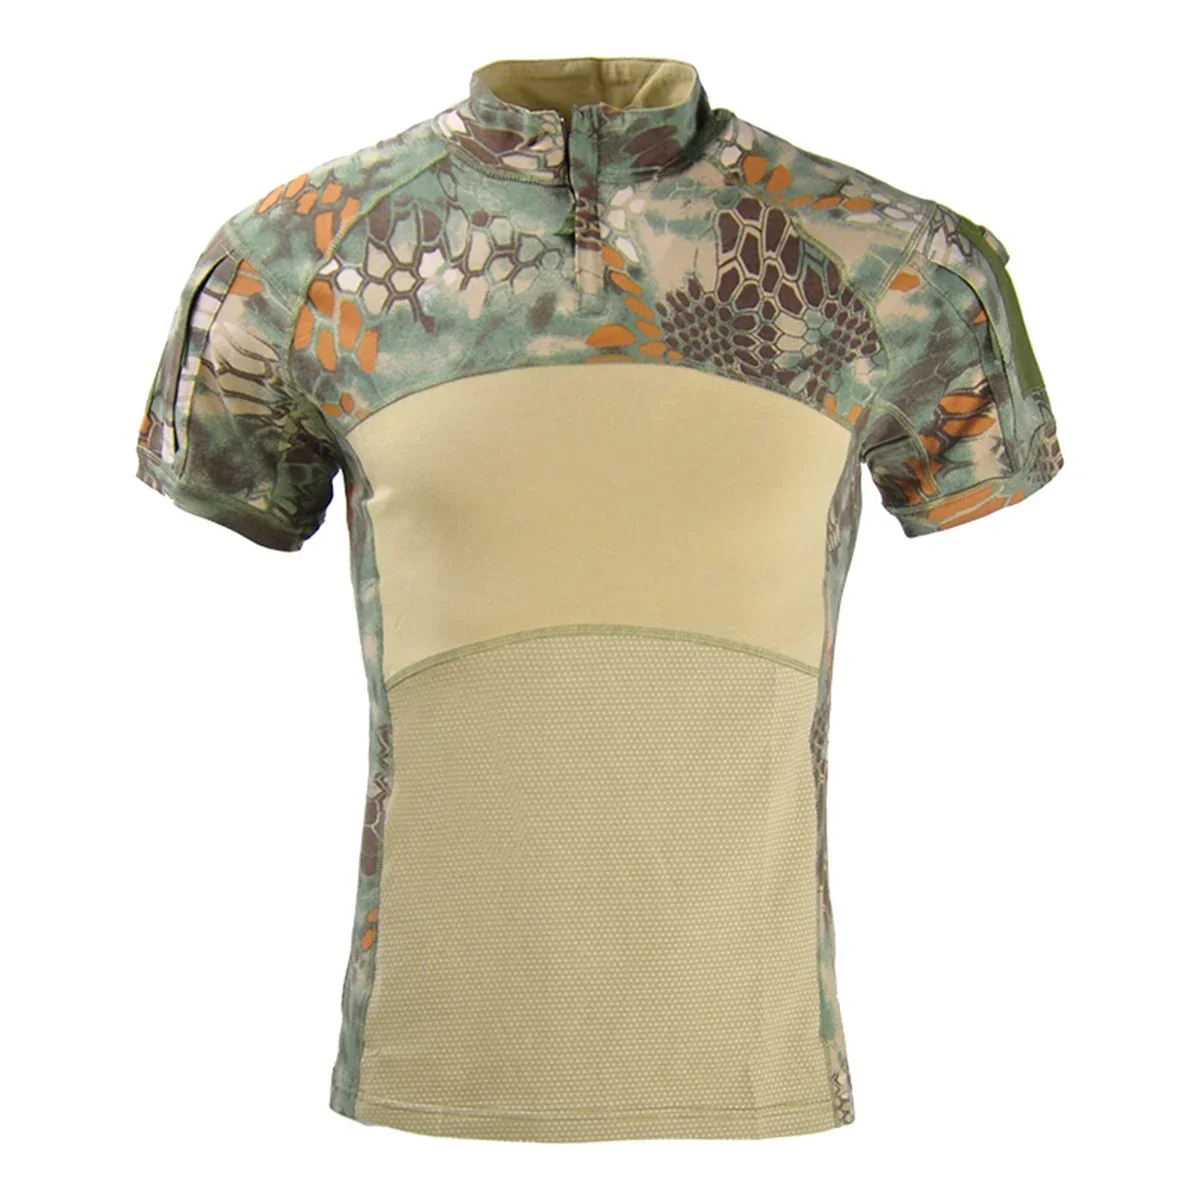 

New Military Army T-Shirt Men Camo Tactical Shirt US Army Combat Uniform Shirt Cargo Multicam Airsoft Paintball Tactical Clothes